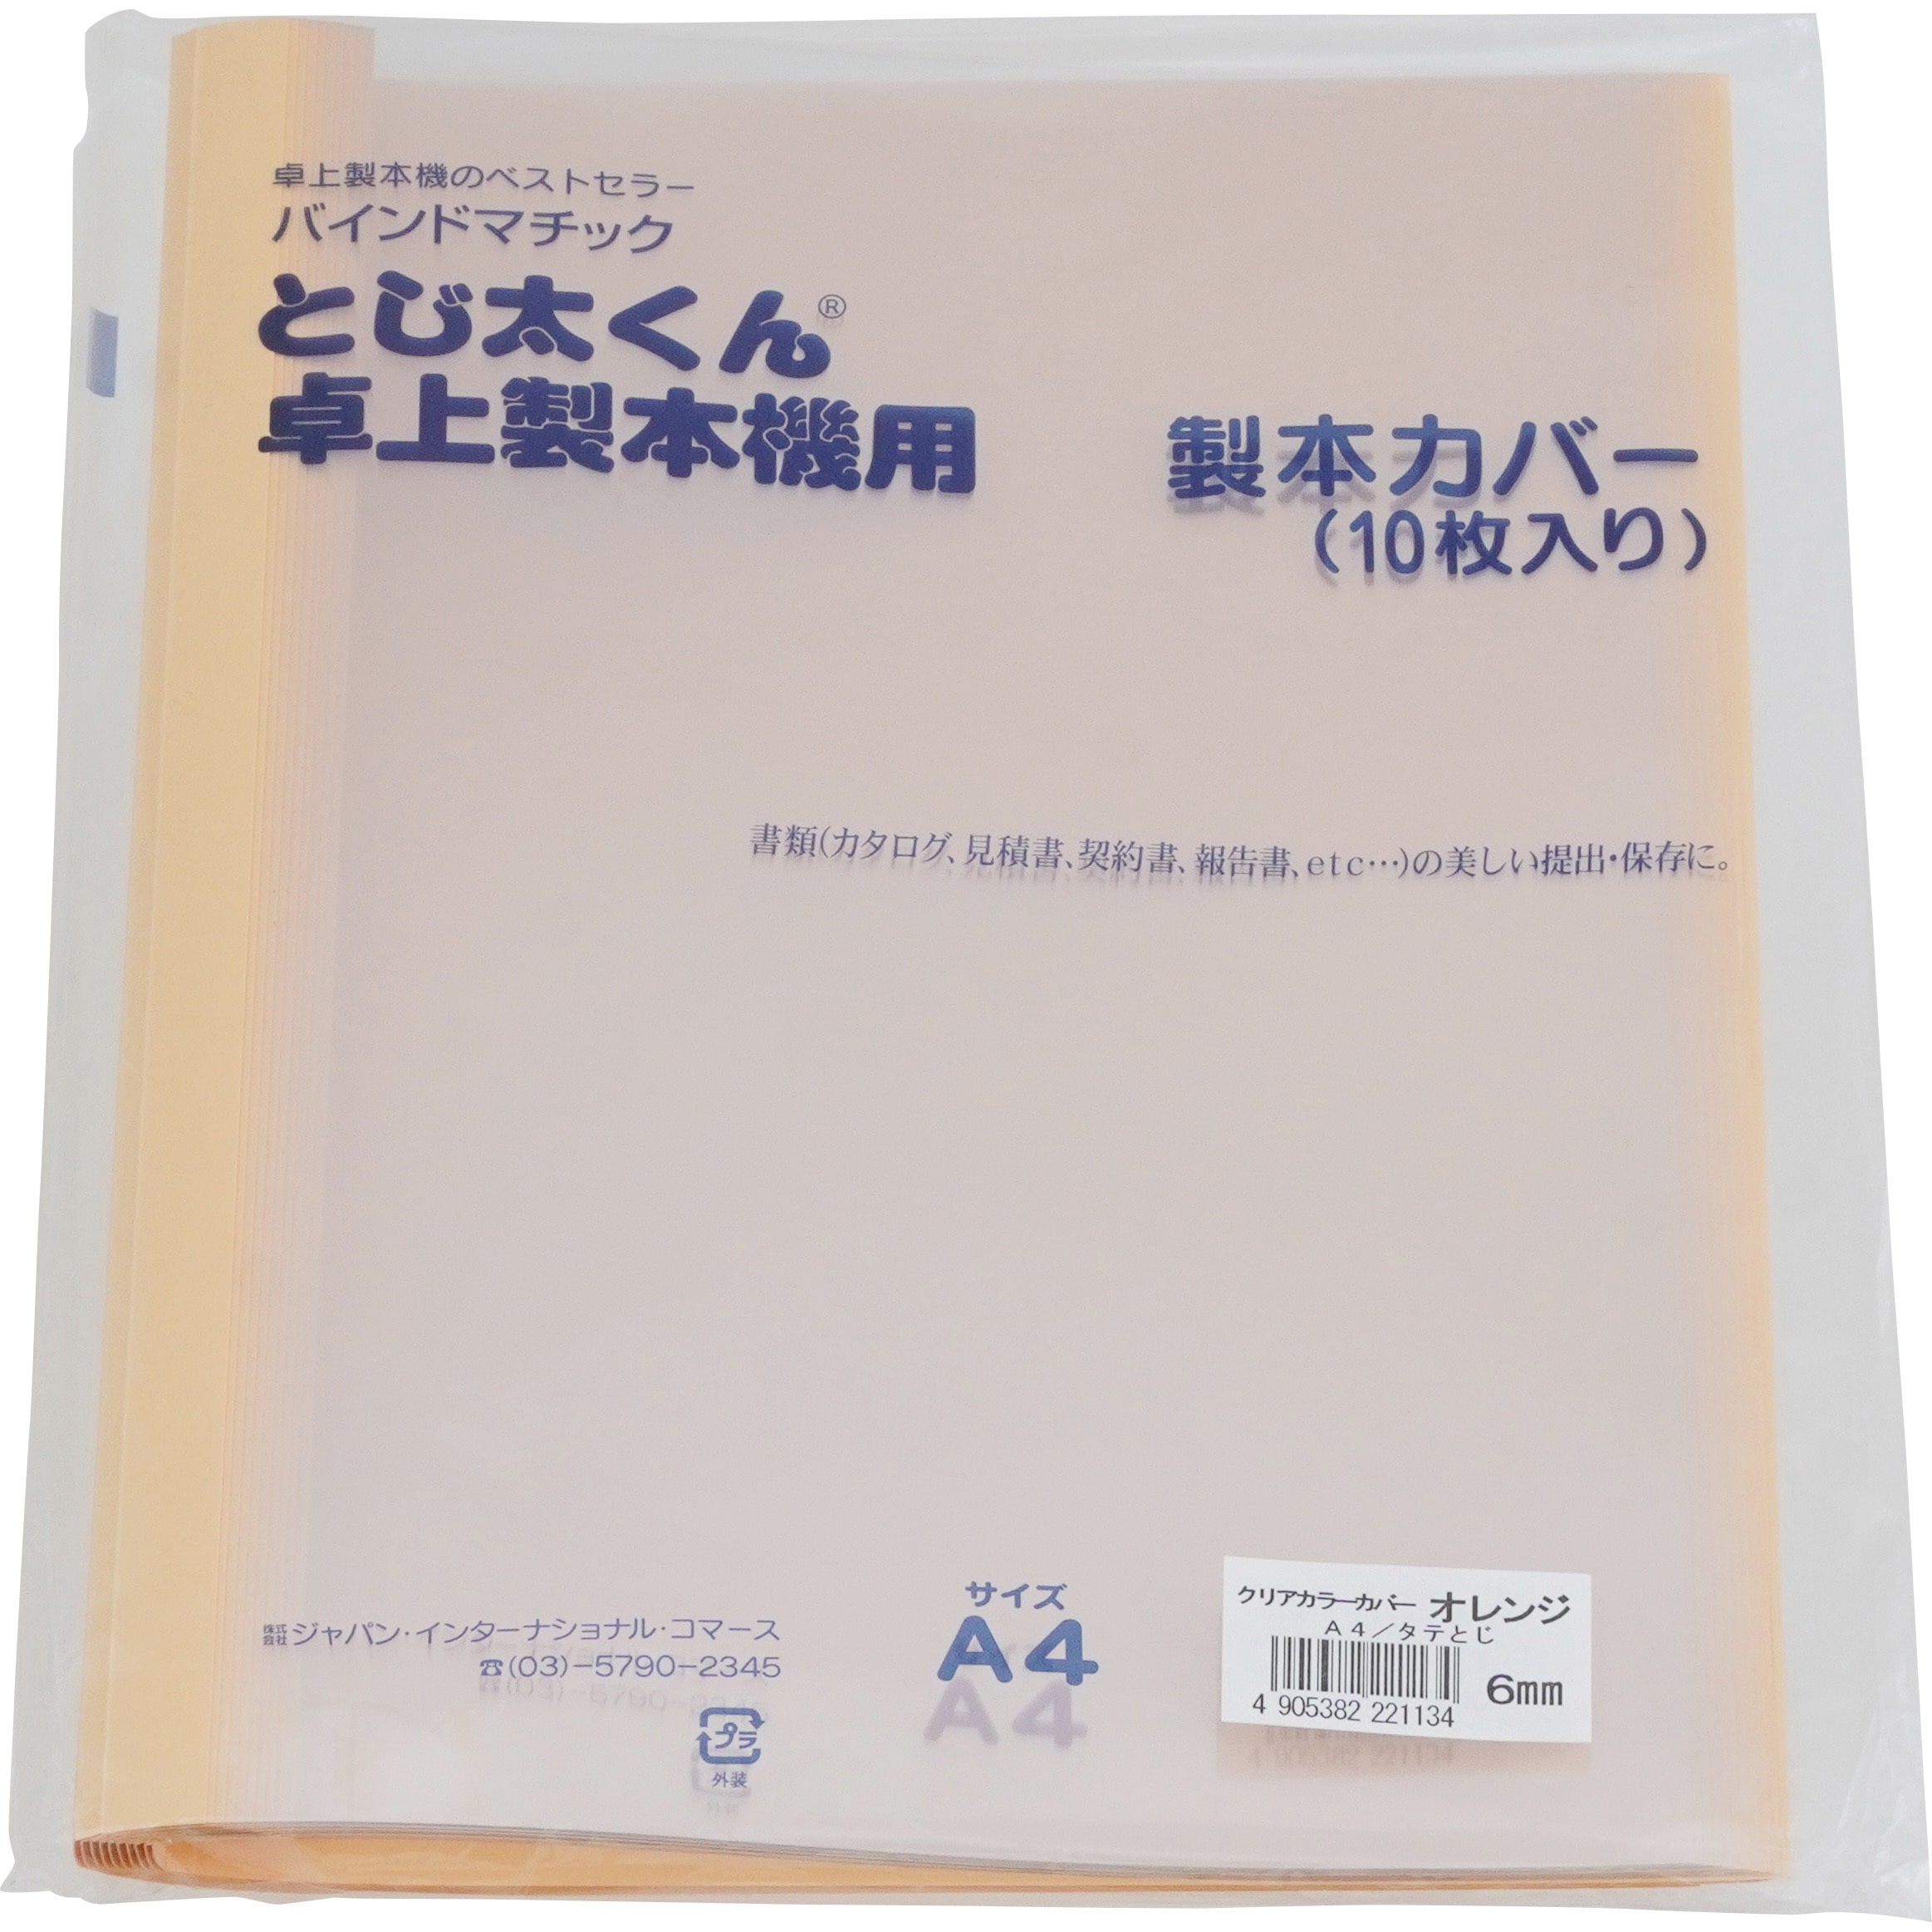 A4-6P オレンジ とじ太くん専用カバー 縦綴 1パック(10枚) ジャパン